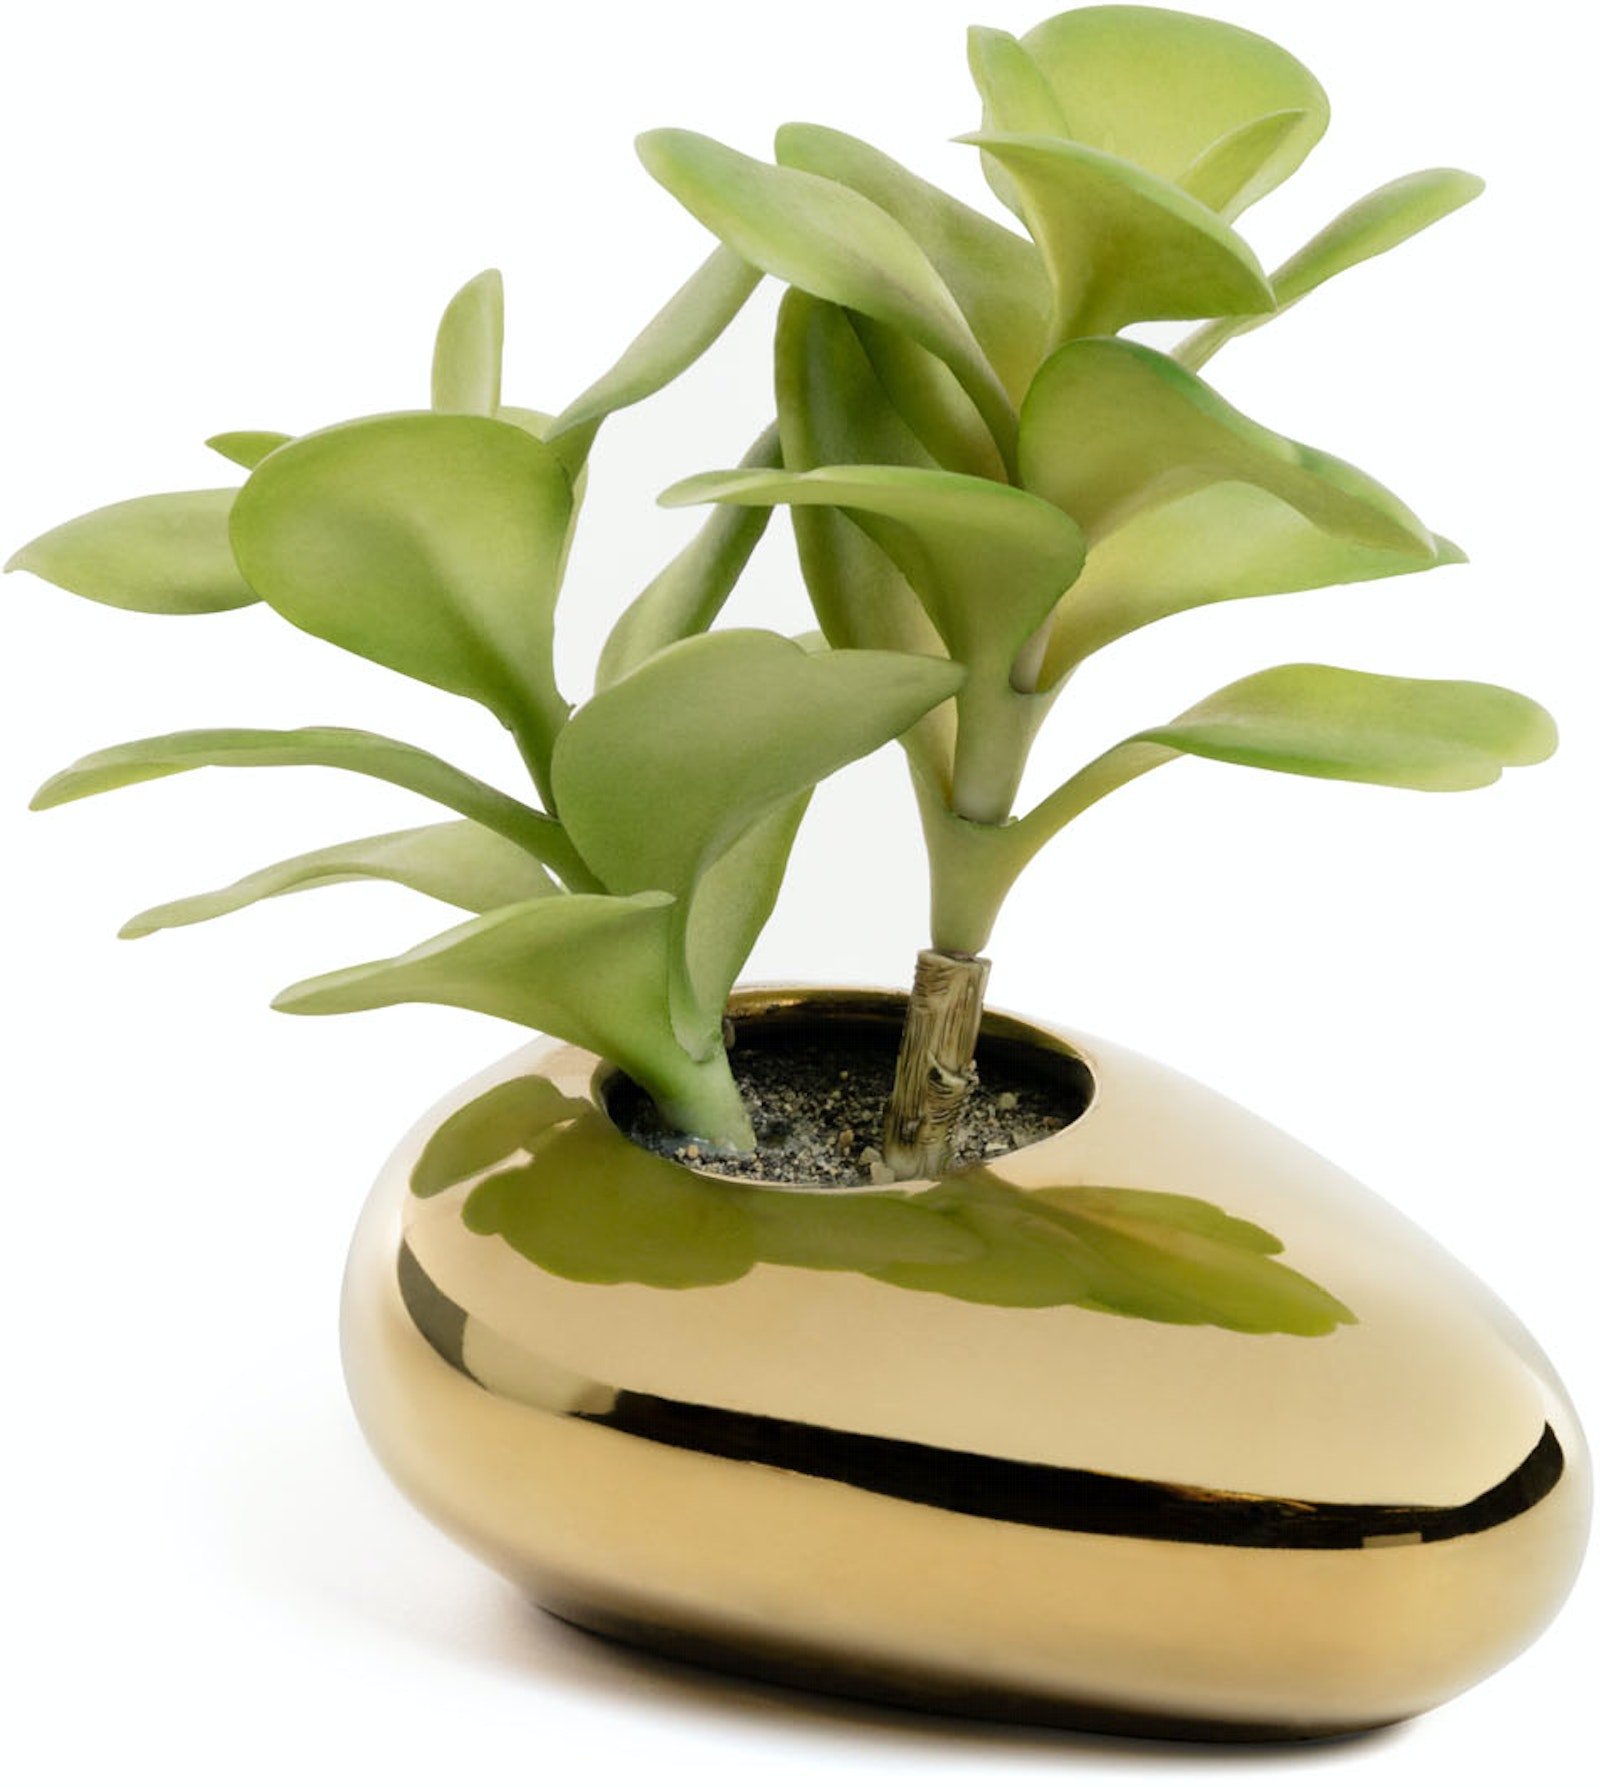 Adenium, Kunstig plante, Plast by LaForma (H: 15 cm. x B: 9 cm. x L: 11 cm., Guld/Grøn)